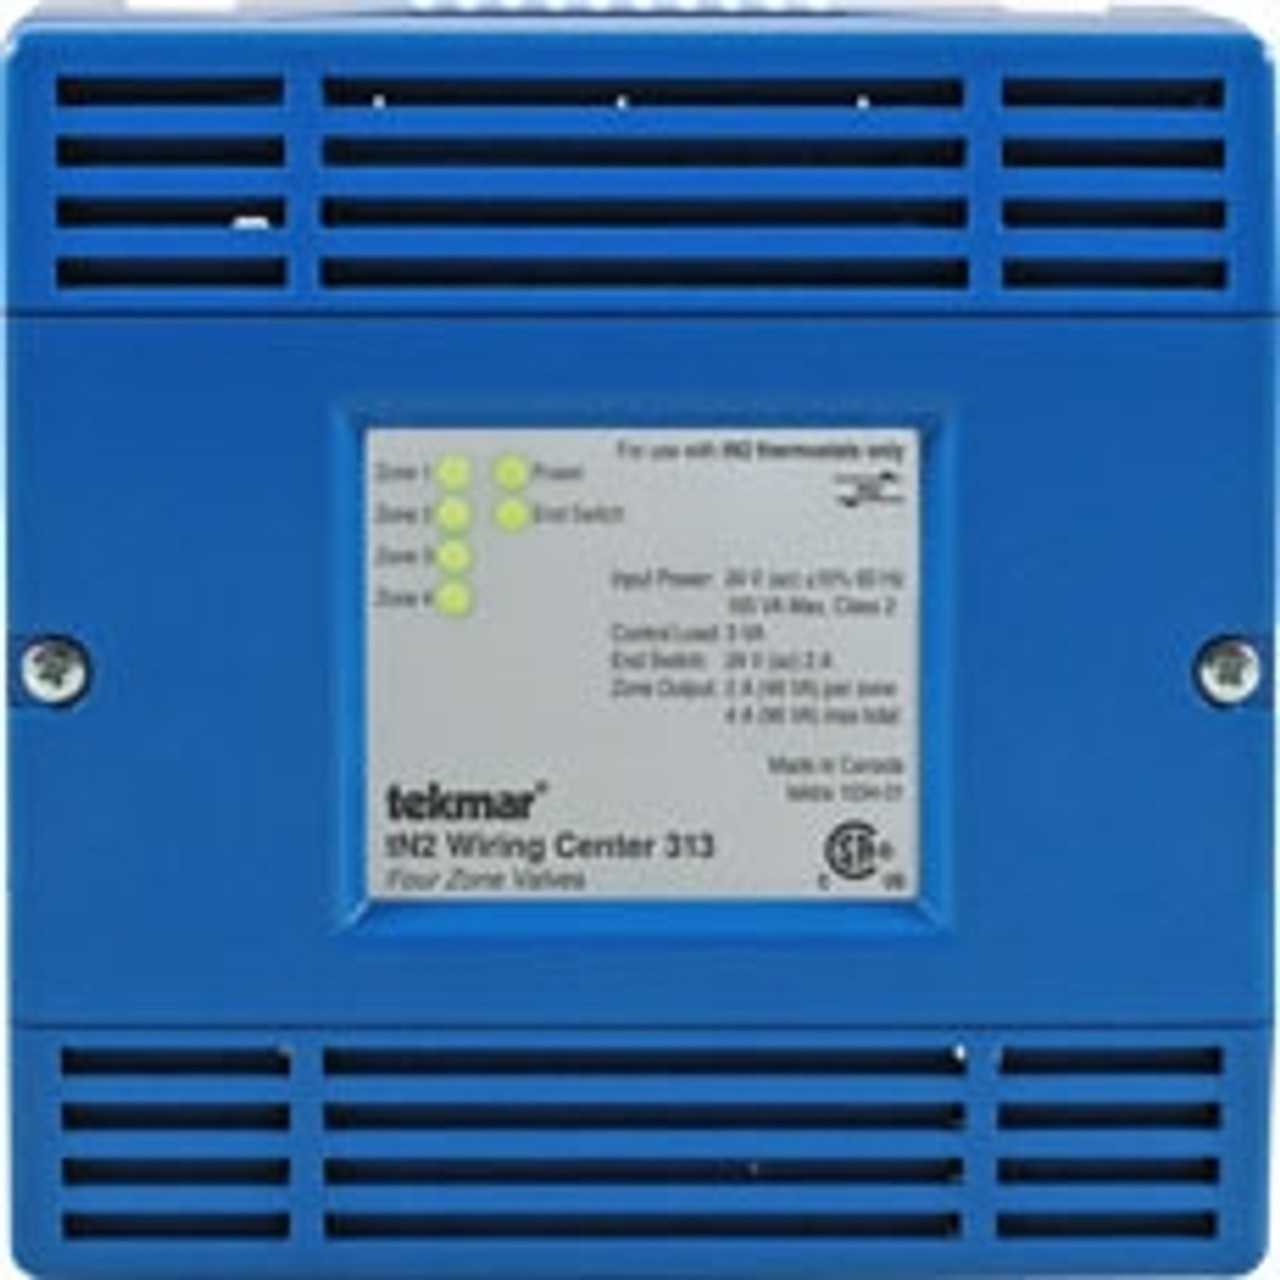 Tekmar 313 tN2 Wiring Center Four Zone Valves